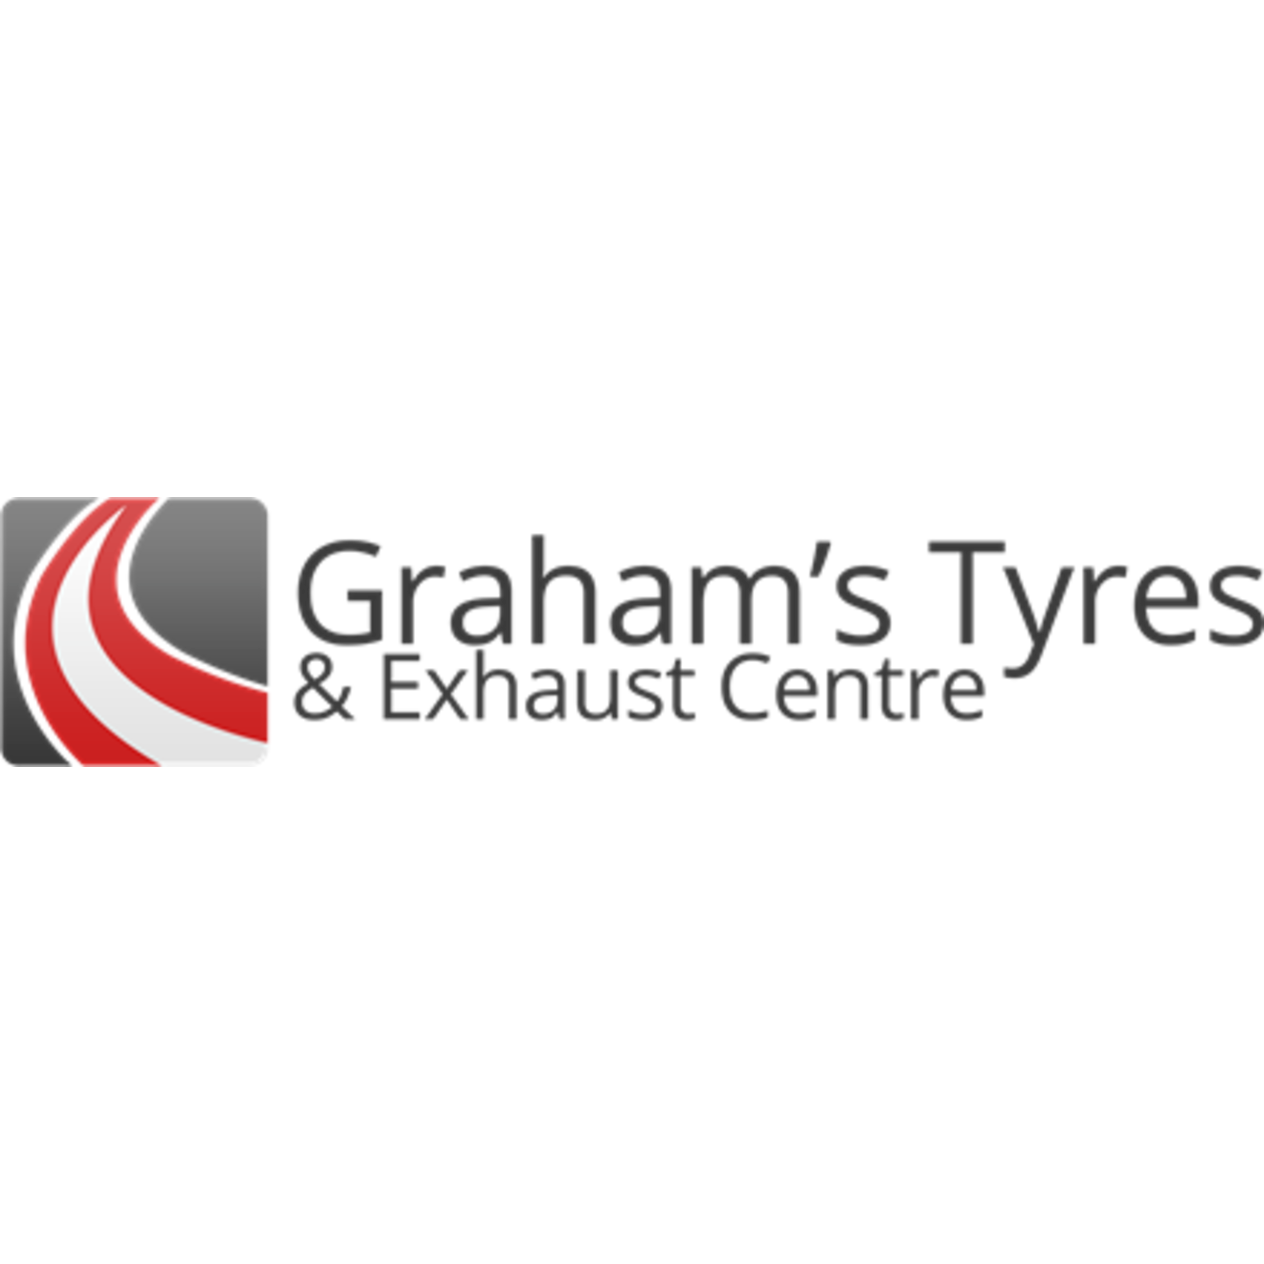 Graham's Tyres - City Centre - Sheffield, South Yorkshire S2 4EA - 01142 726092 | ShowMeLocal.com